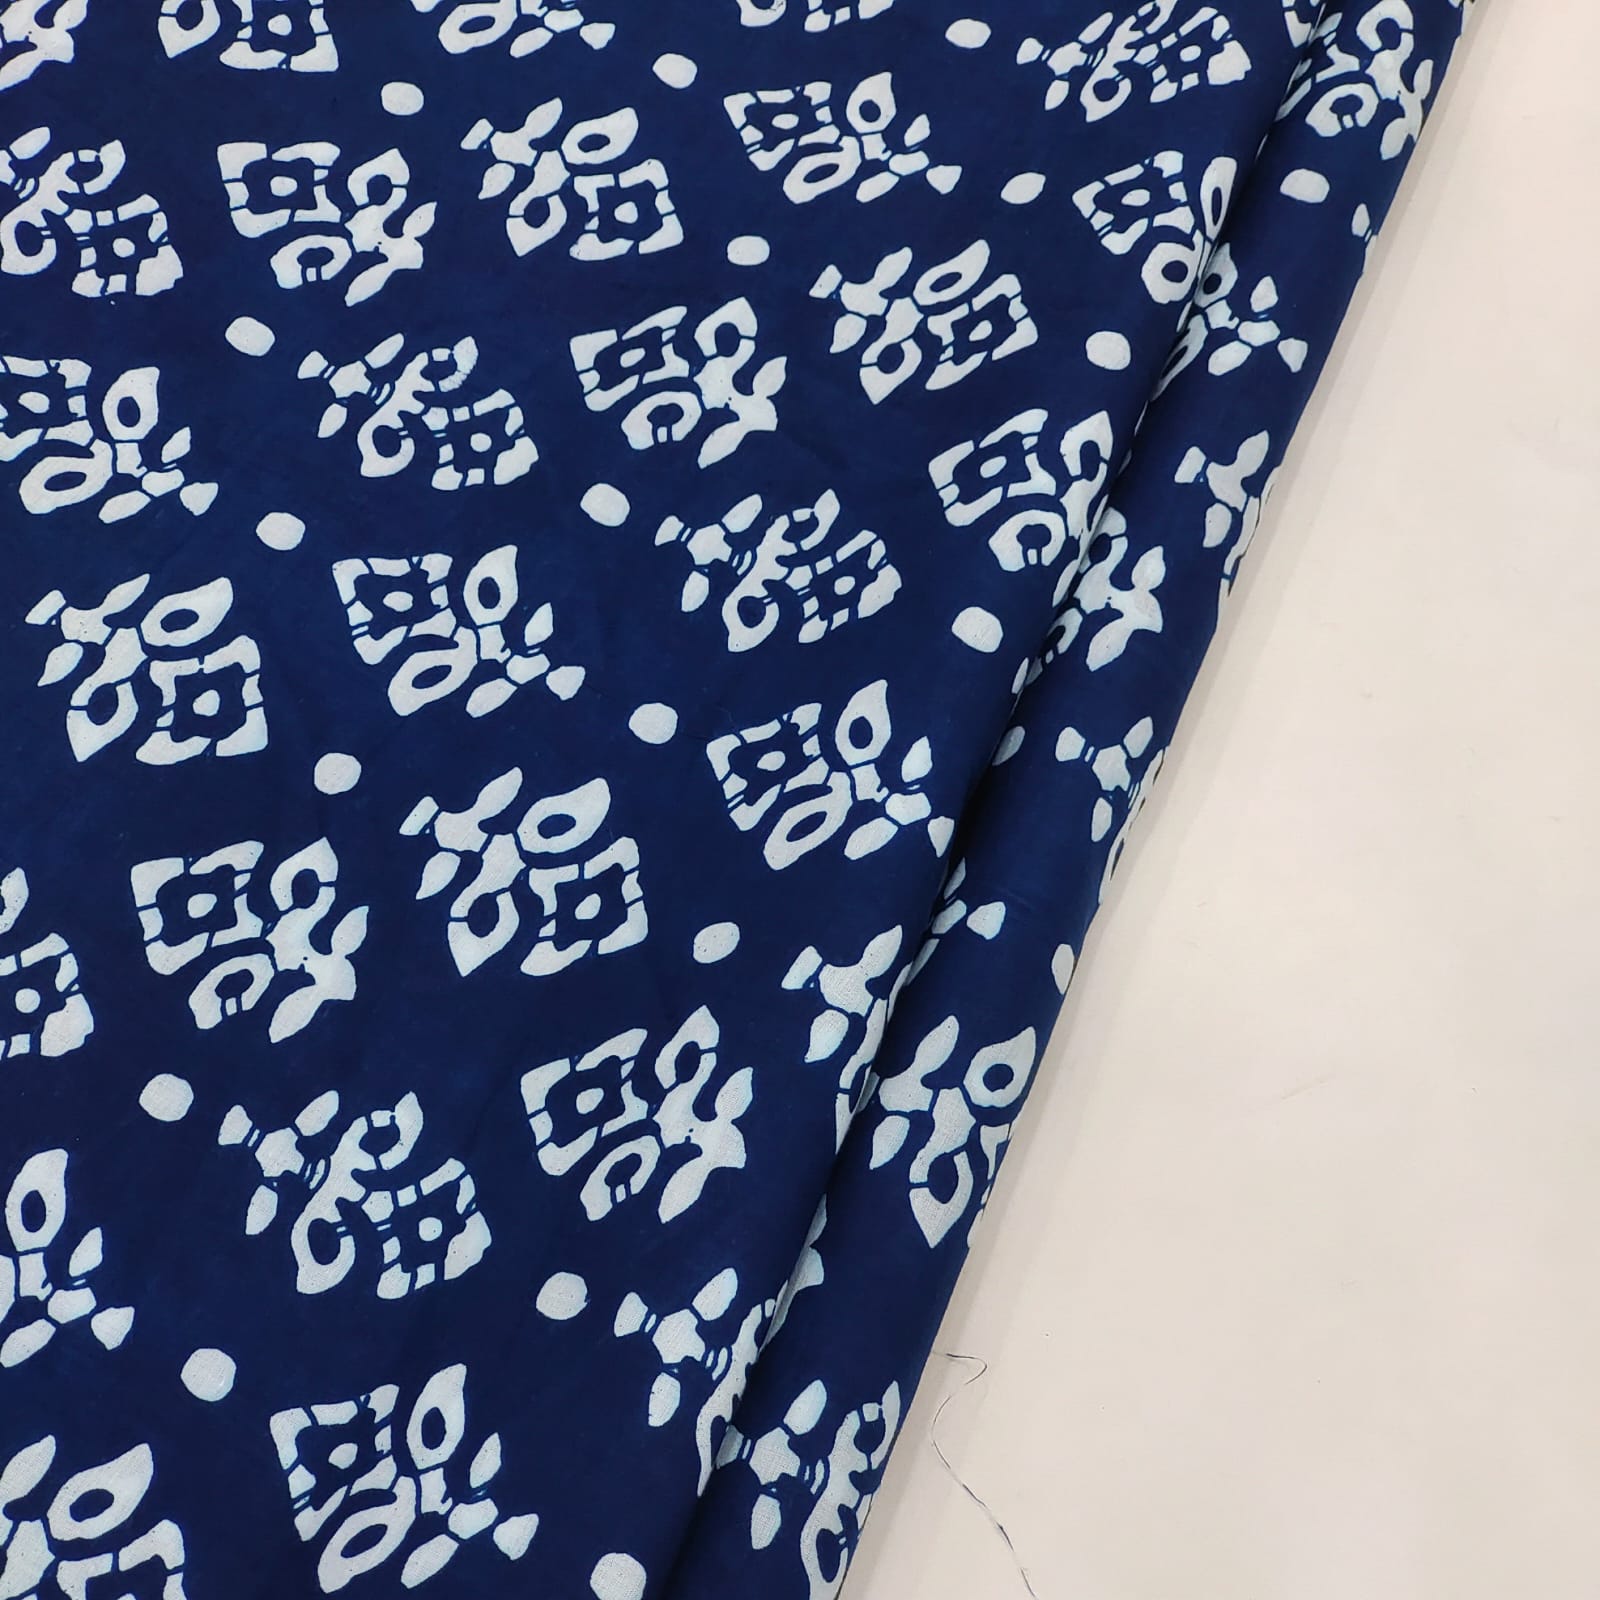 Indigo blue screen printed cotton running material